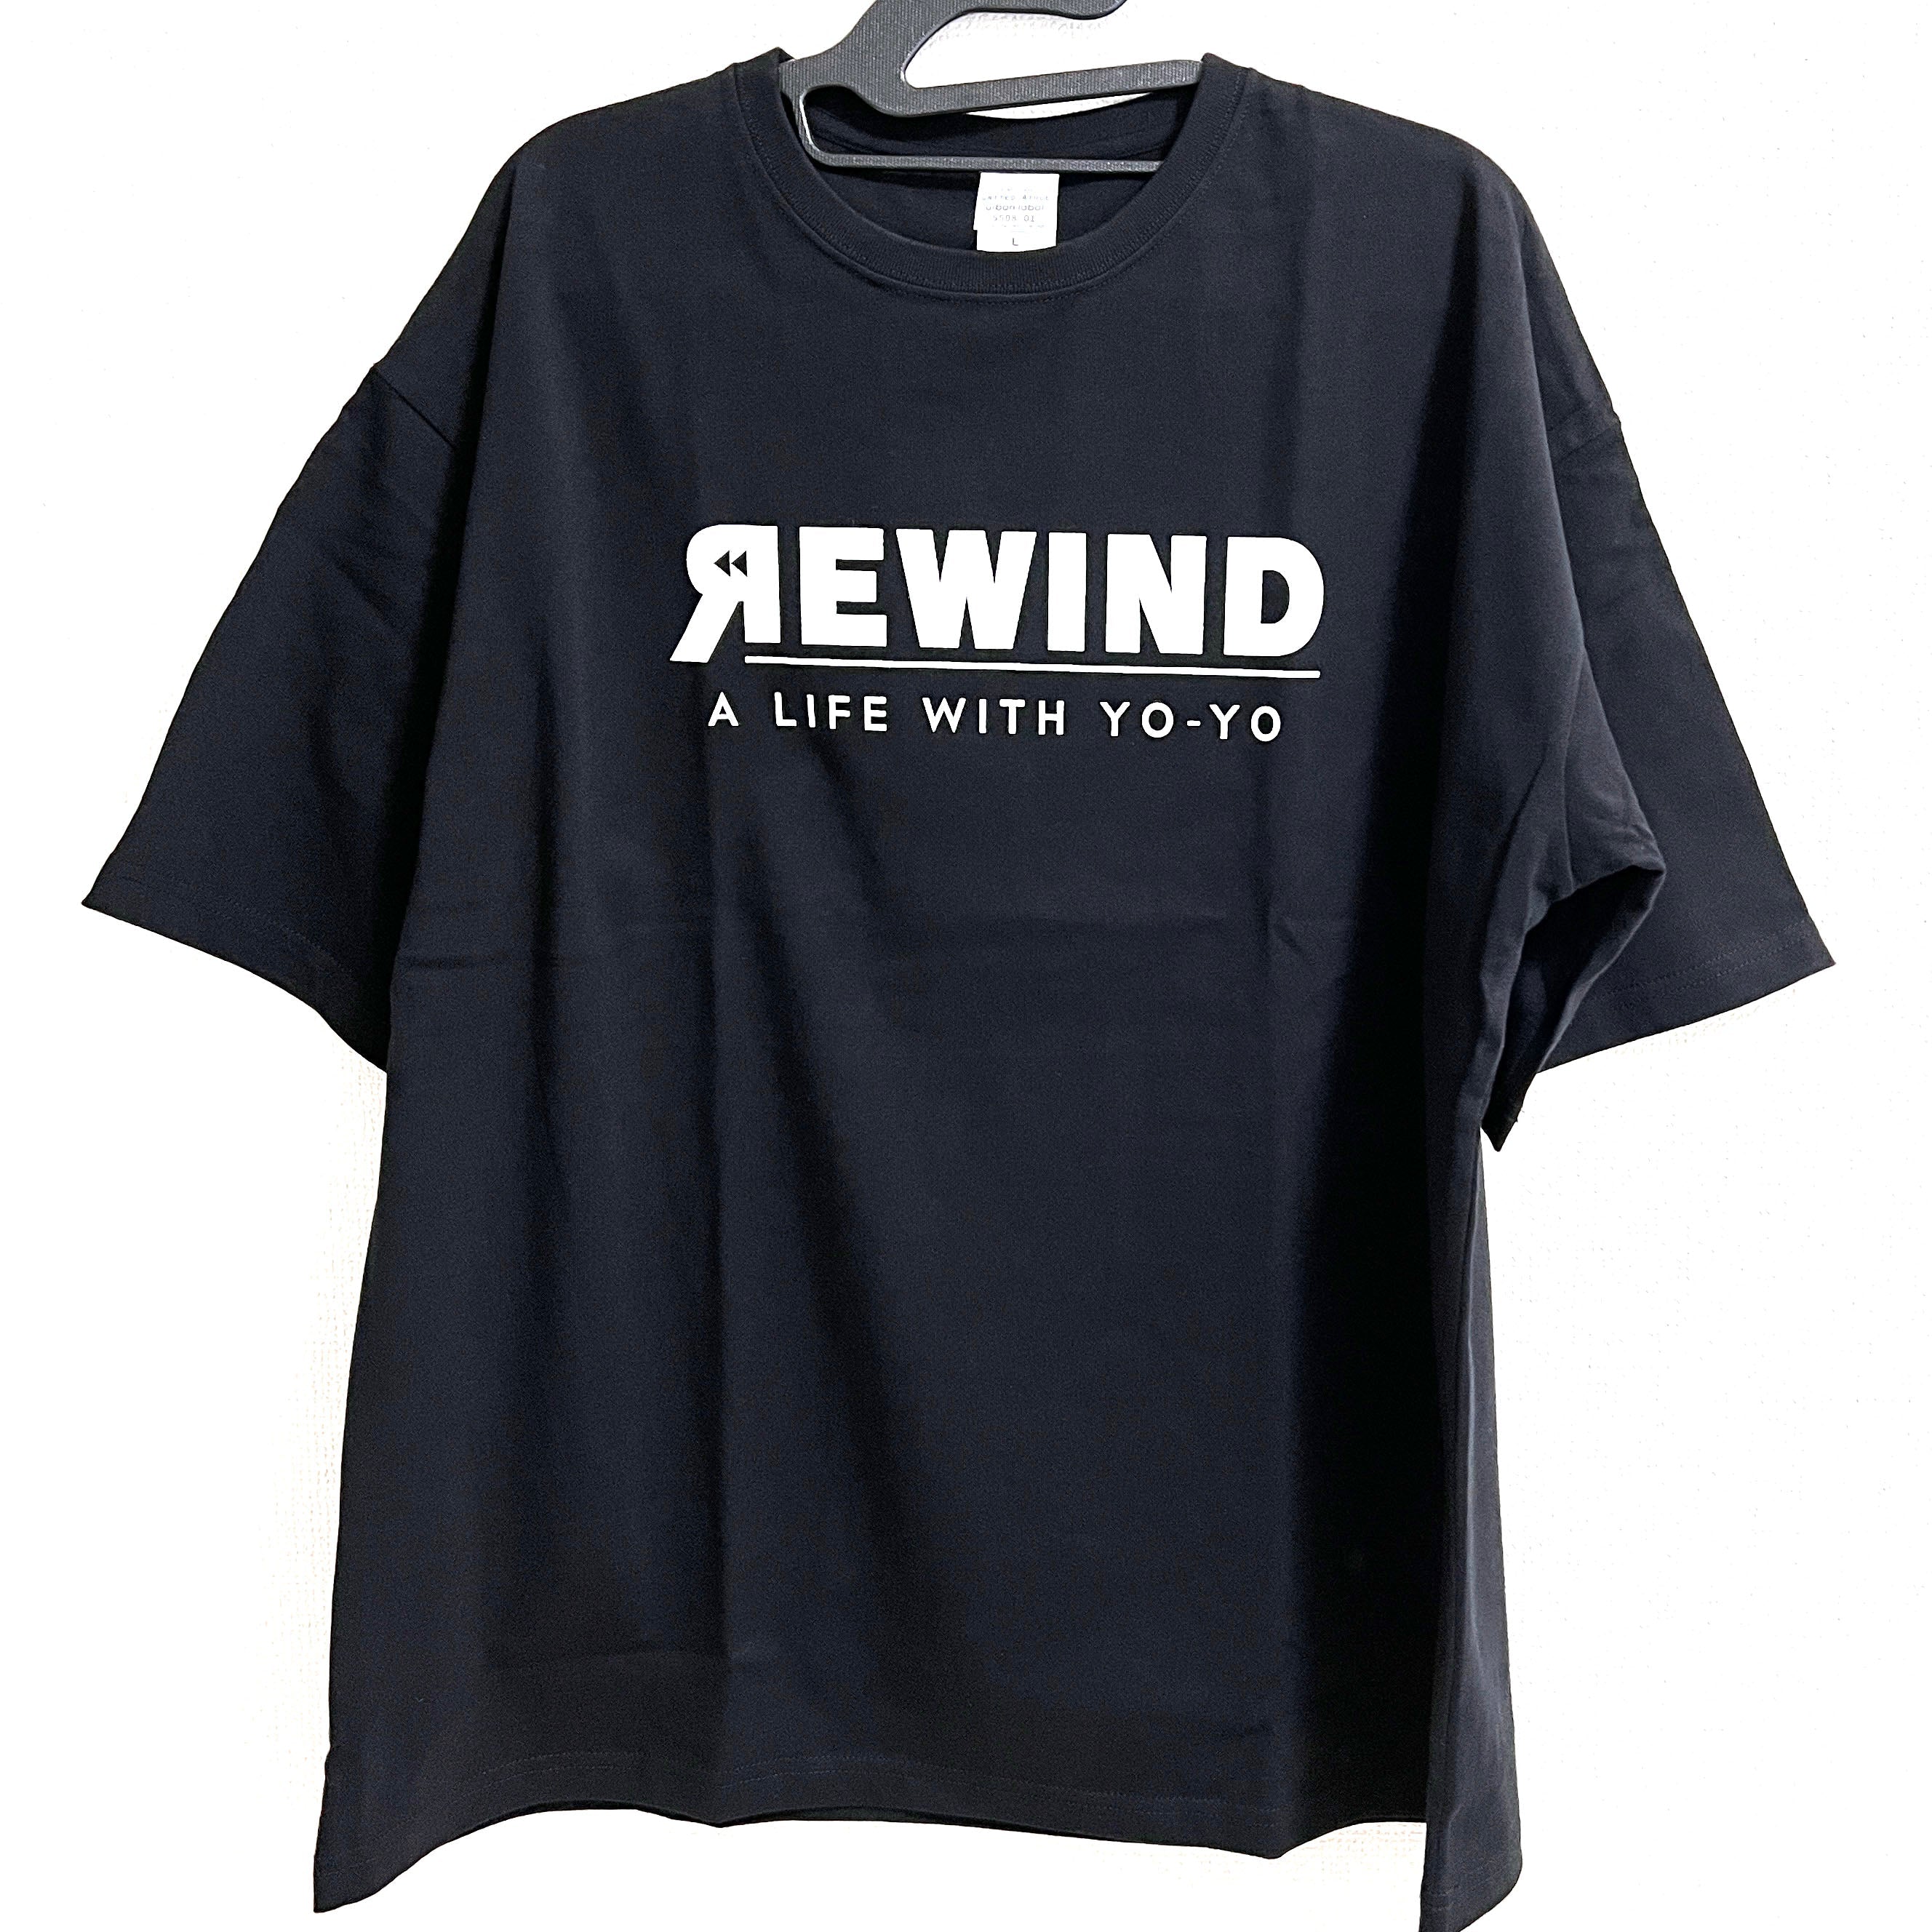 REWIND Loose Fitting Silhouette T-shirt (Black / White Logo) - YOYO STORE REWIND WORLDWIDE